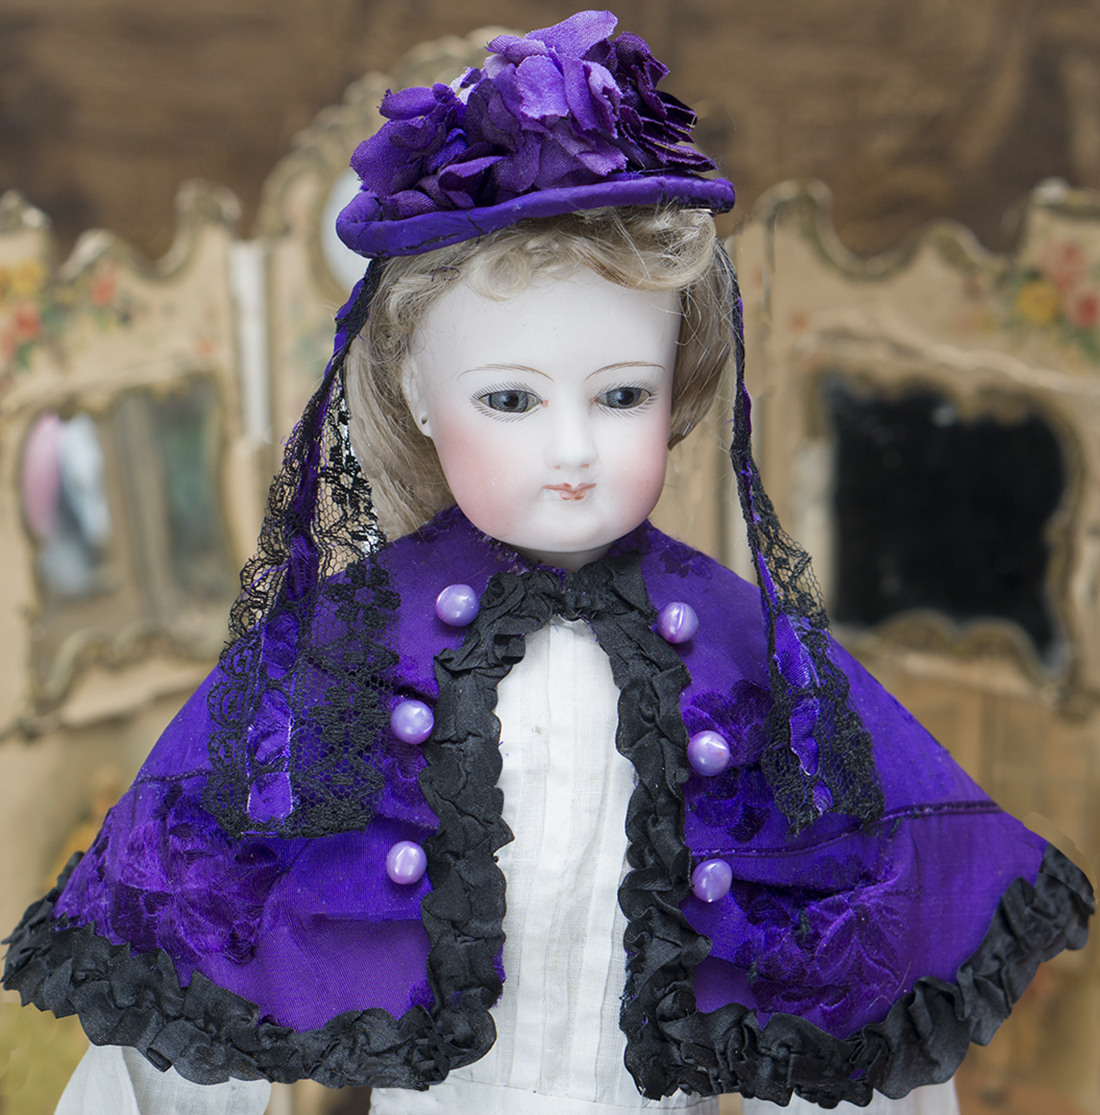 Antique doll set